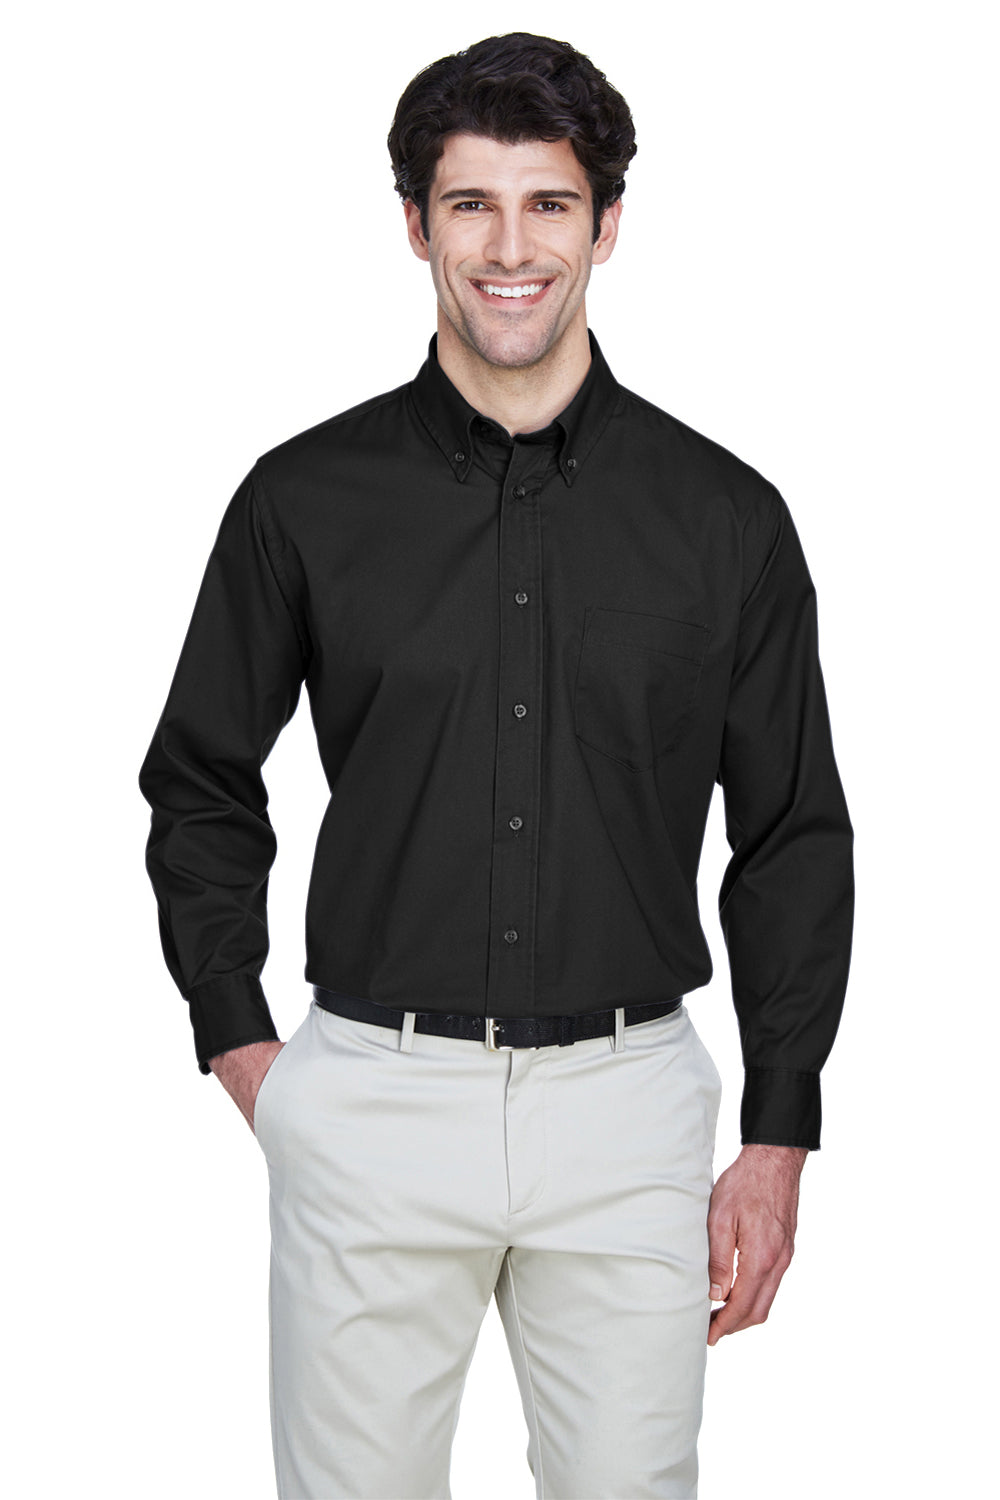 UltraClub 8975 Mens Whisper Long Sleeve Button Down Shirt w/ Pocket Black Front